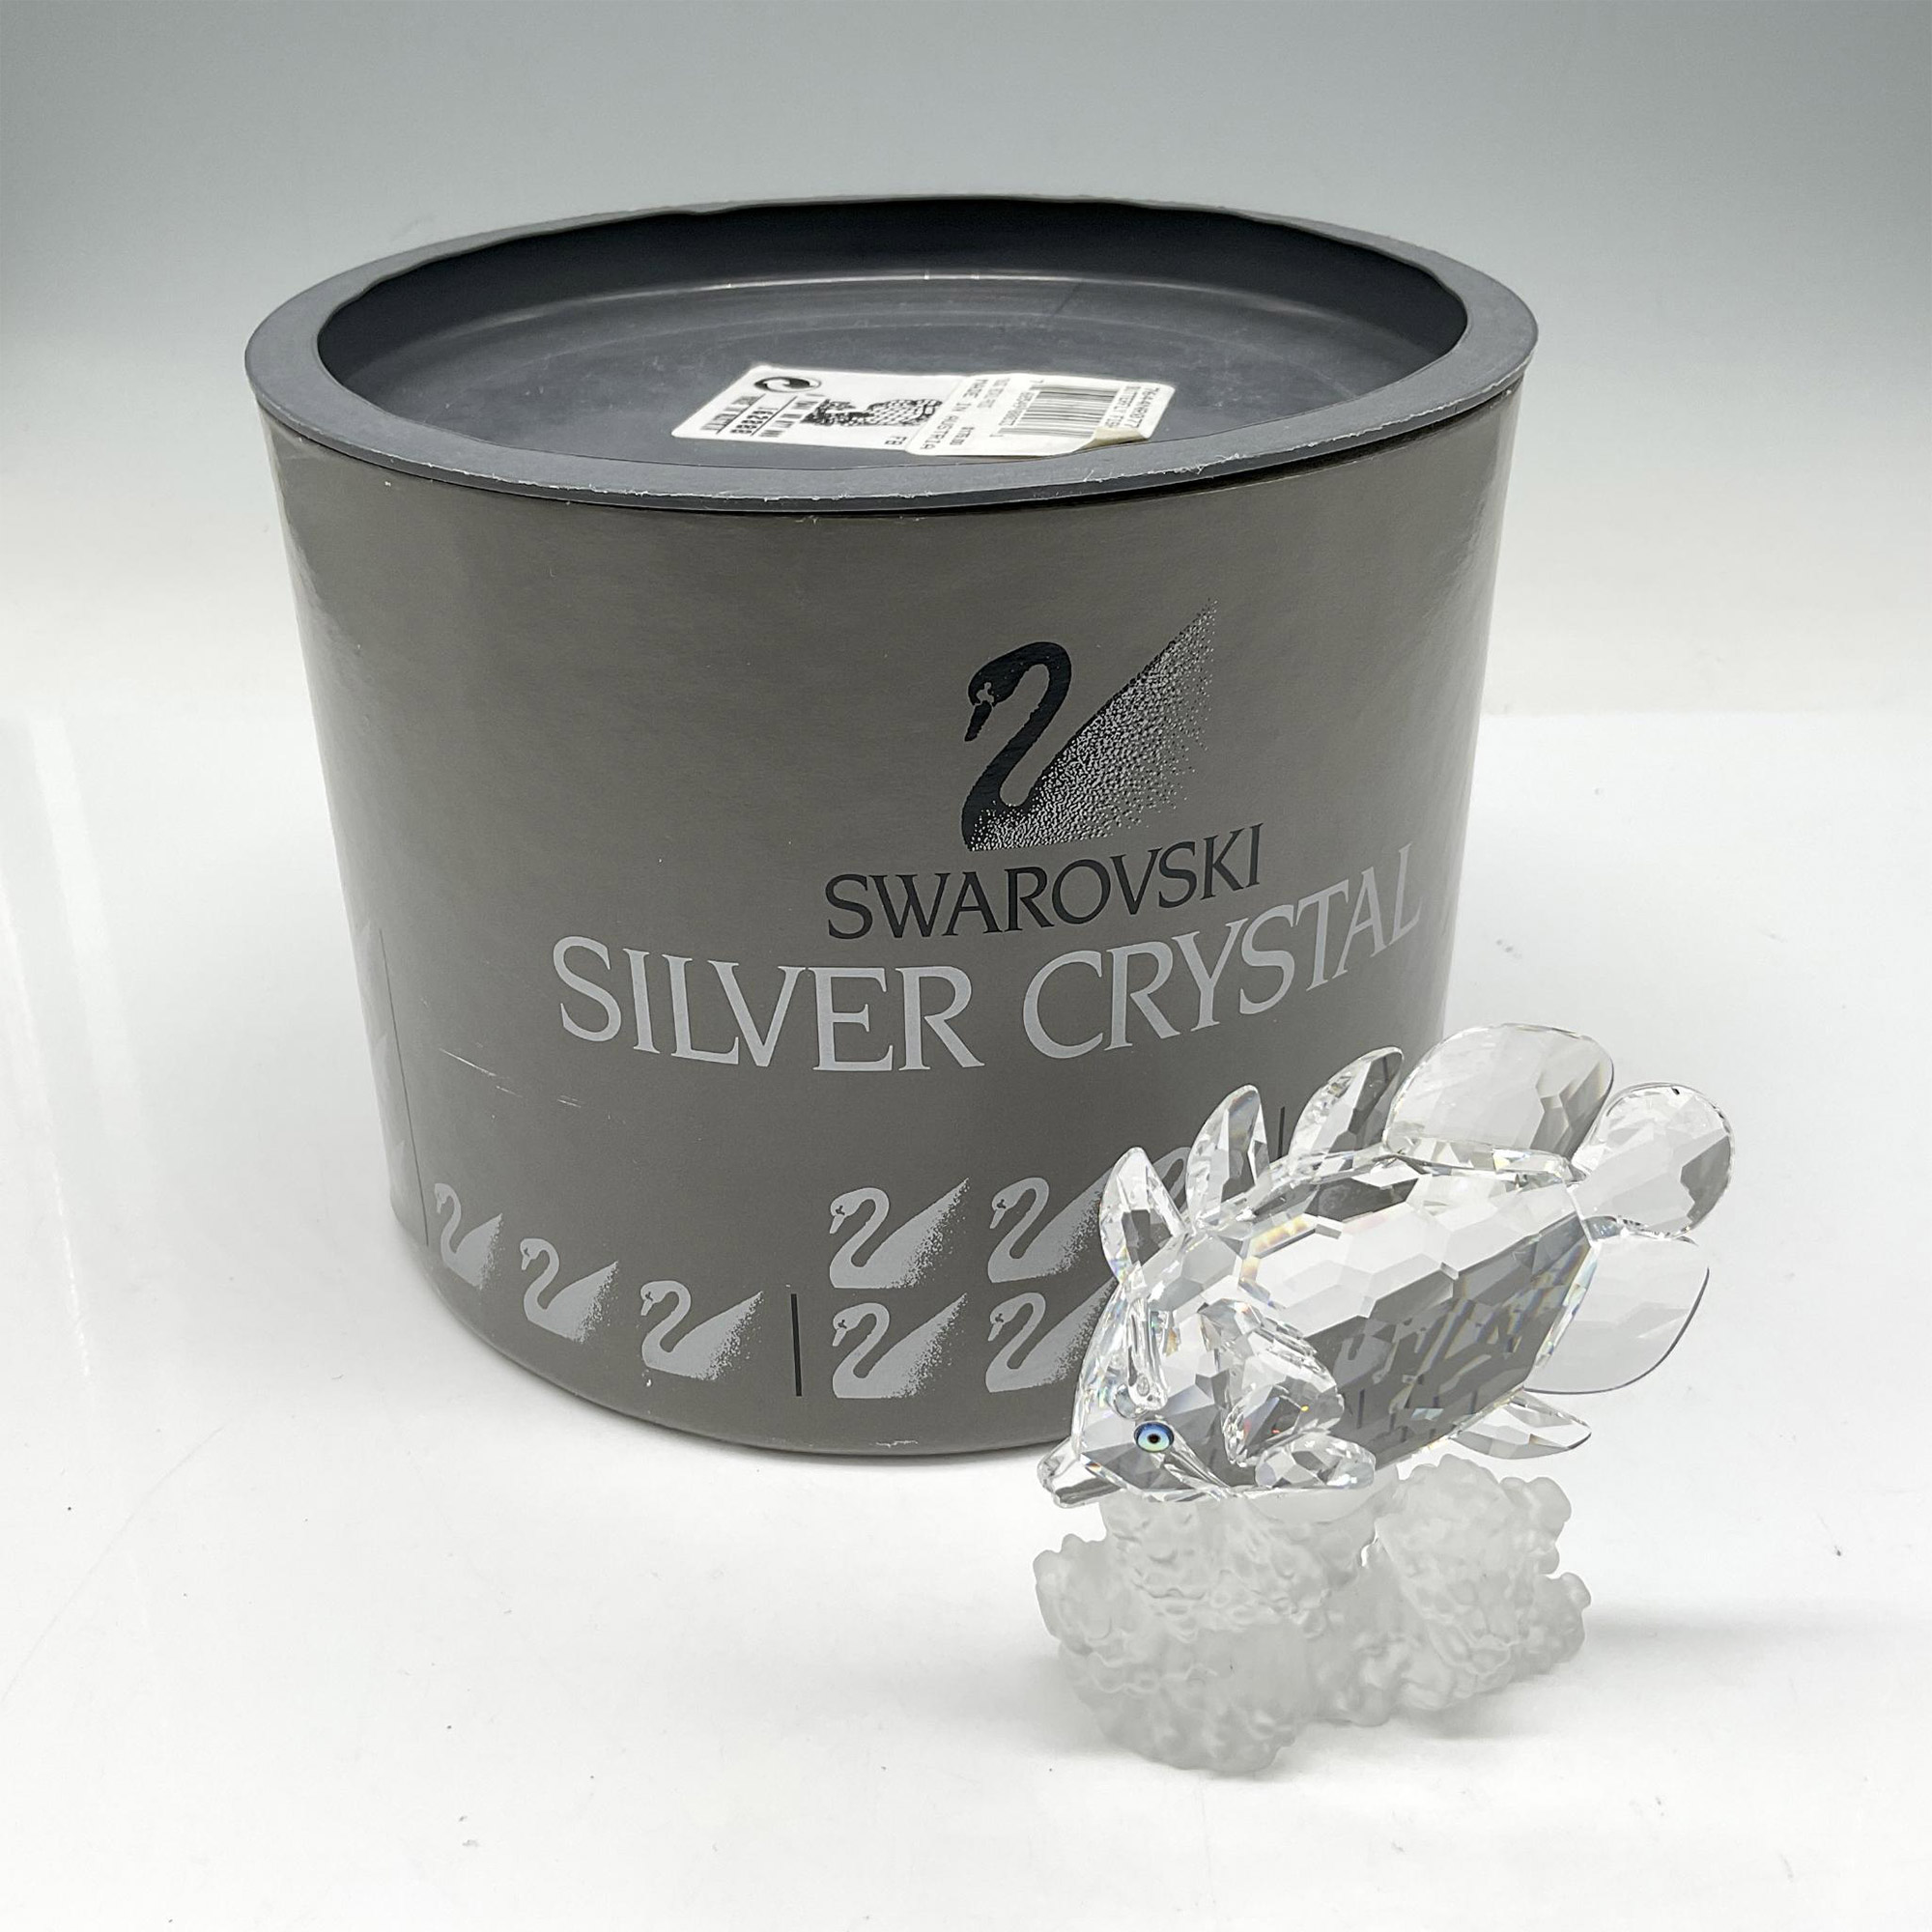 Swarovski Silver Crystal Figurine, Butterfly Fish - Image 4 of 4